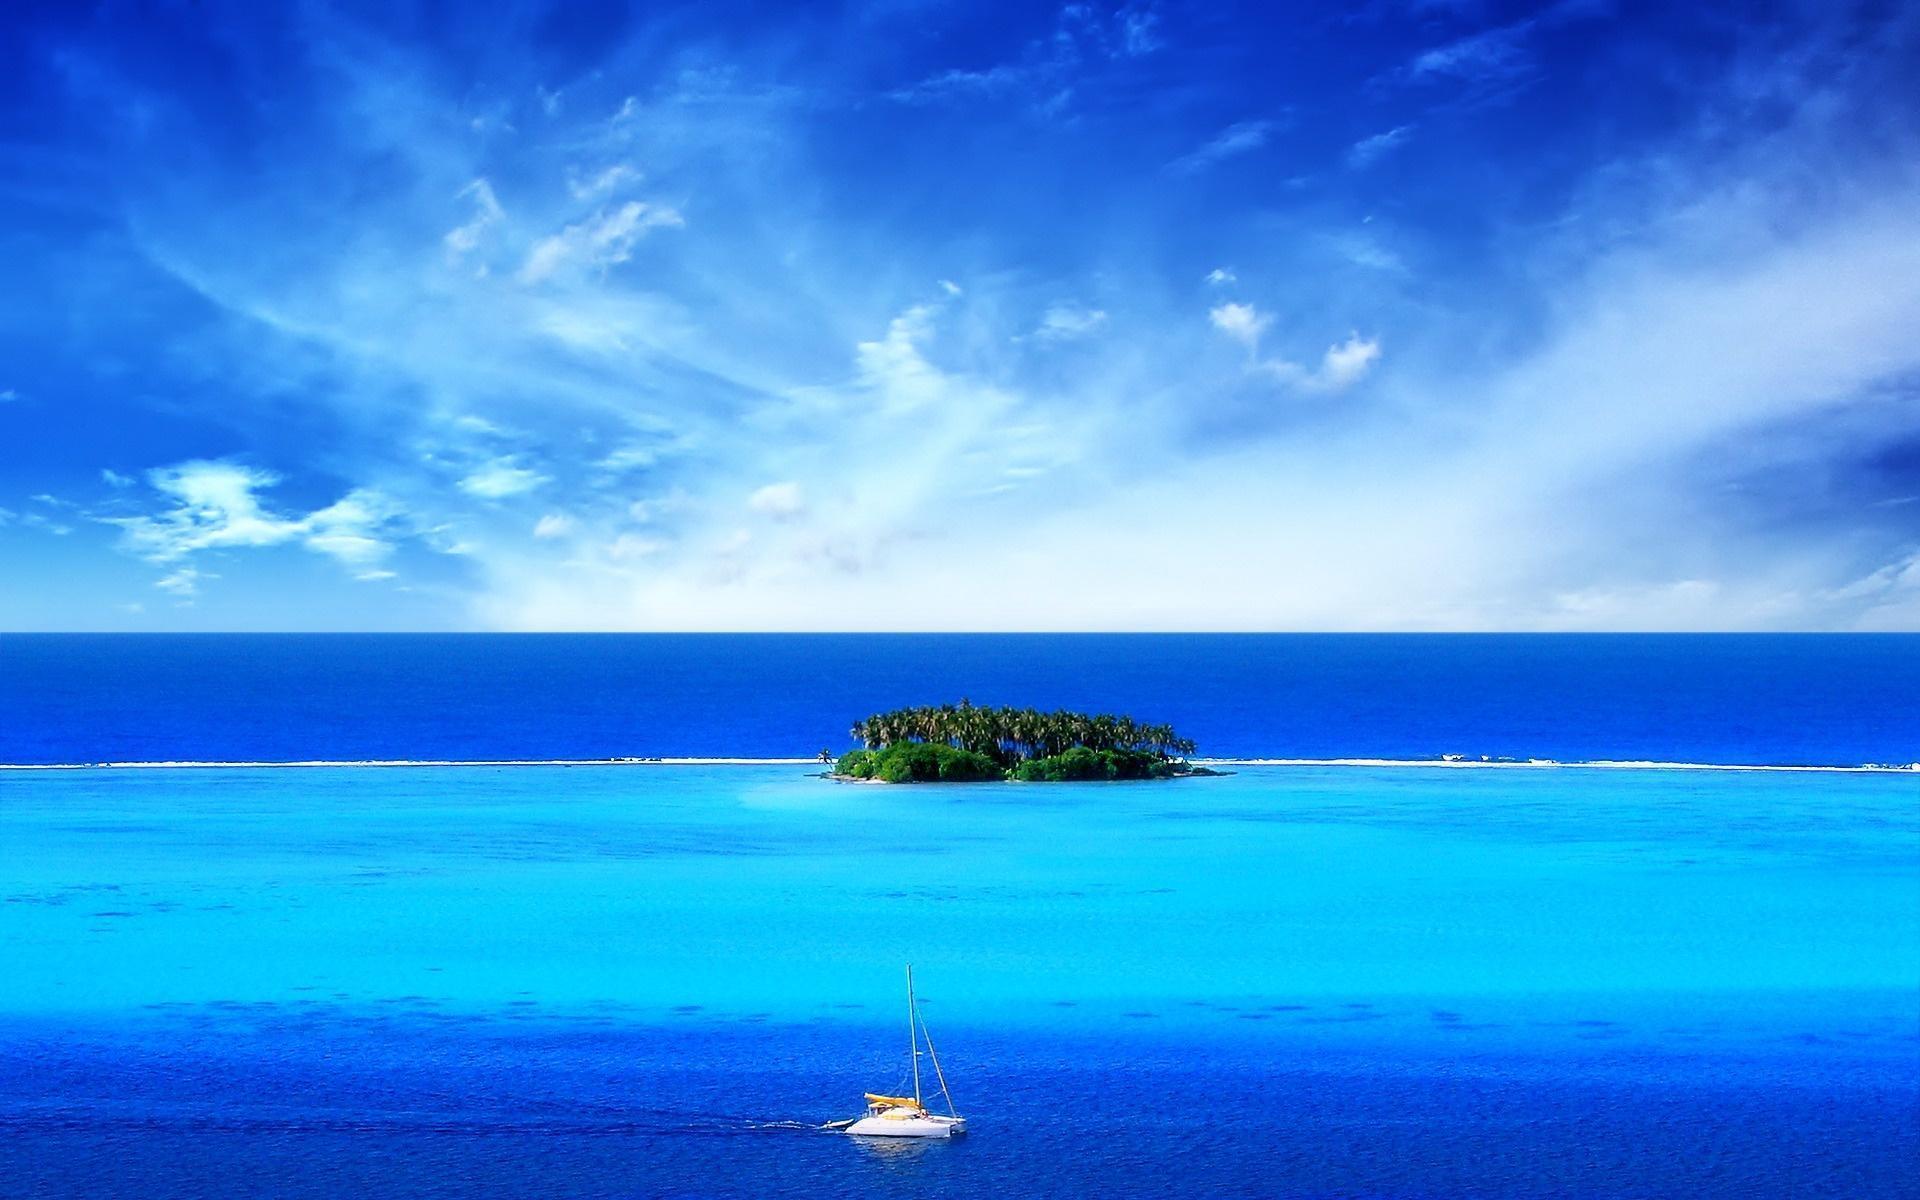 Blue Sky Desktop Wallpaper. Blue Sky Image Free